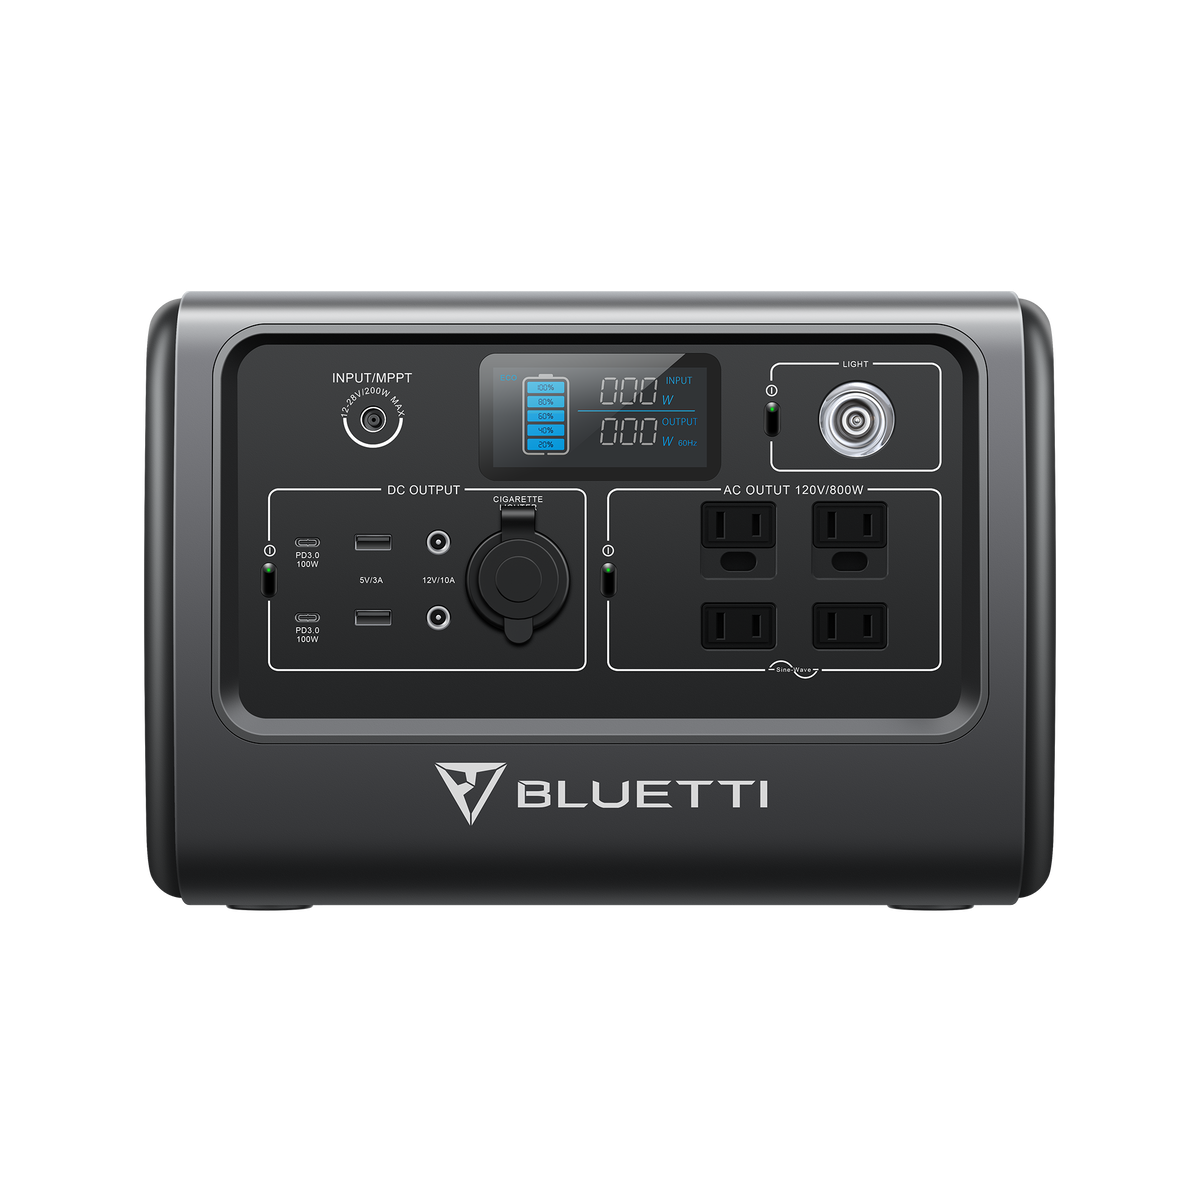 BLUETTI EB70 GR: Bluetti EB70, power station, 1000 W, grey at reichelt  elektronik